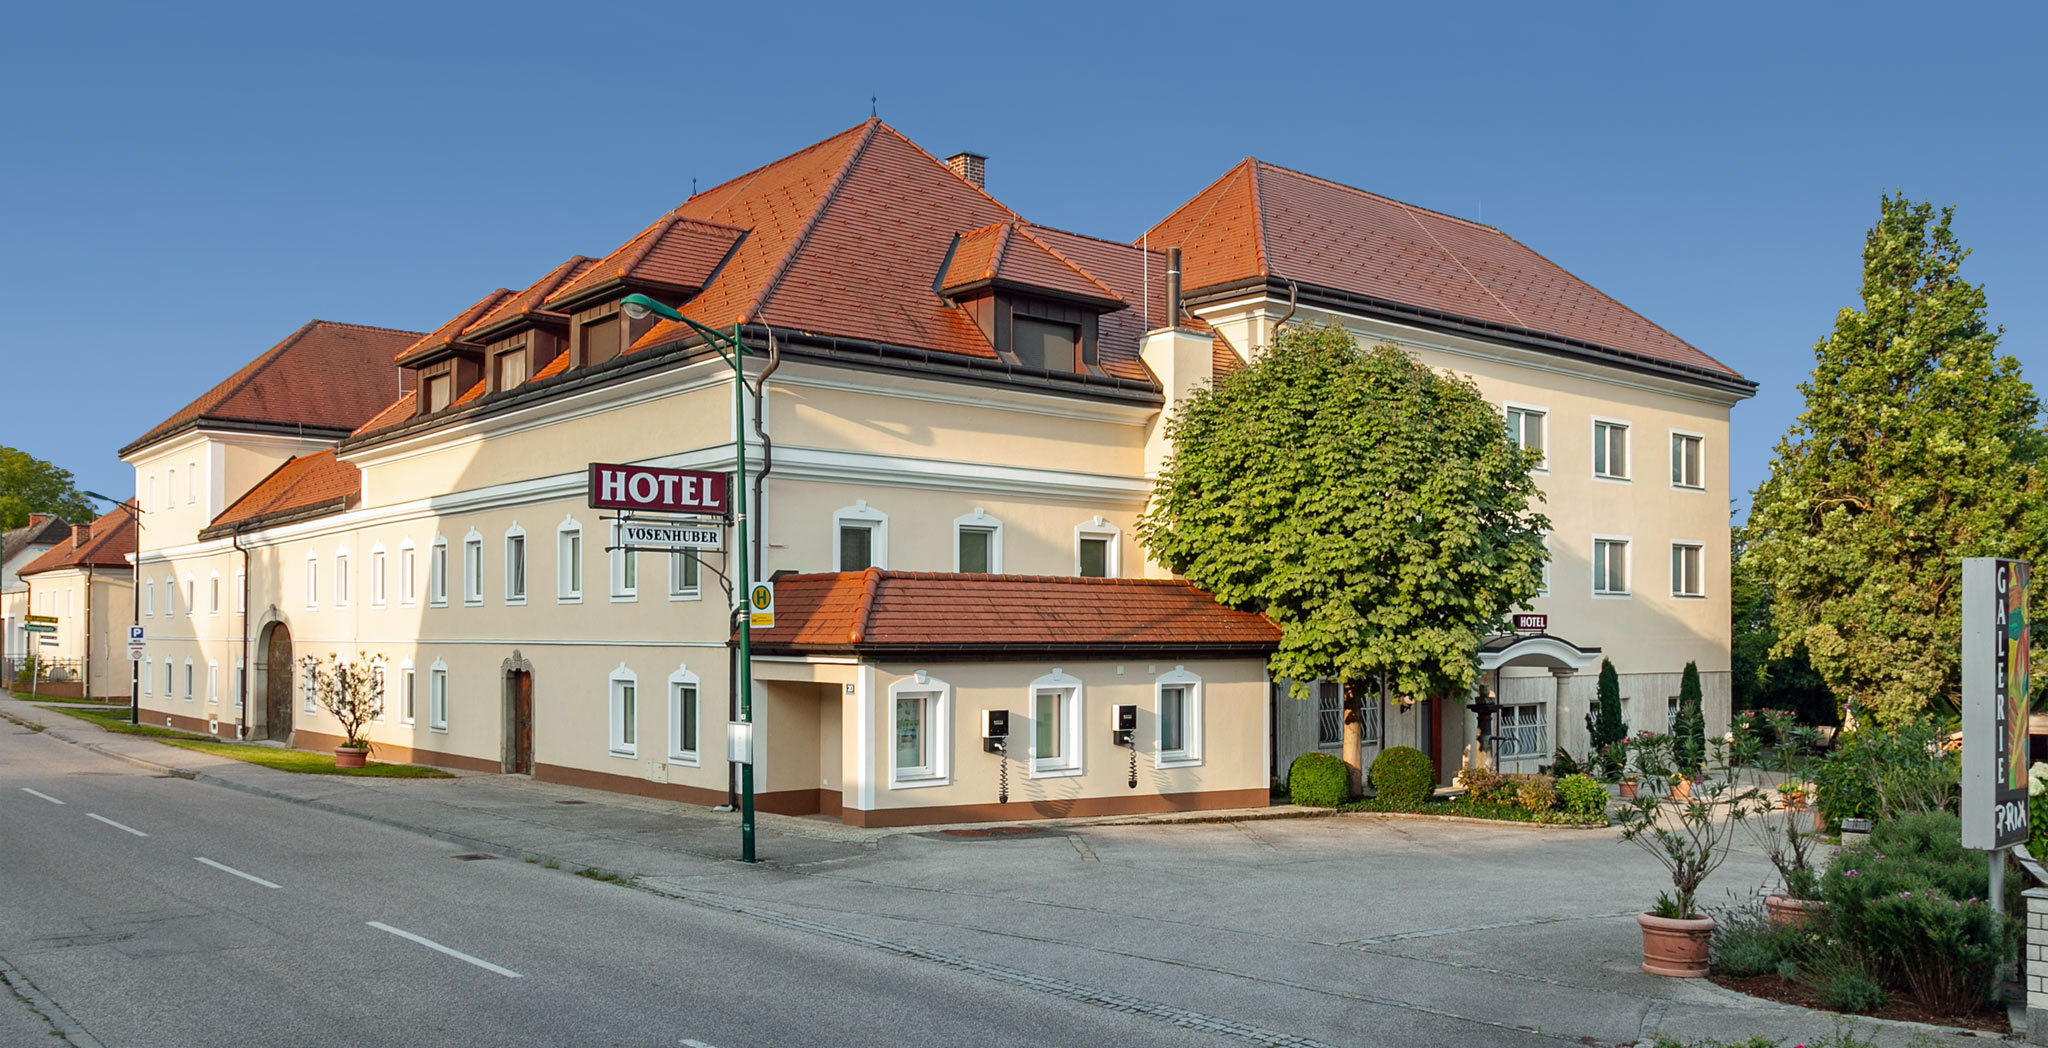 Hotel Vösenhuber in Ernsthofen